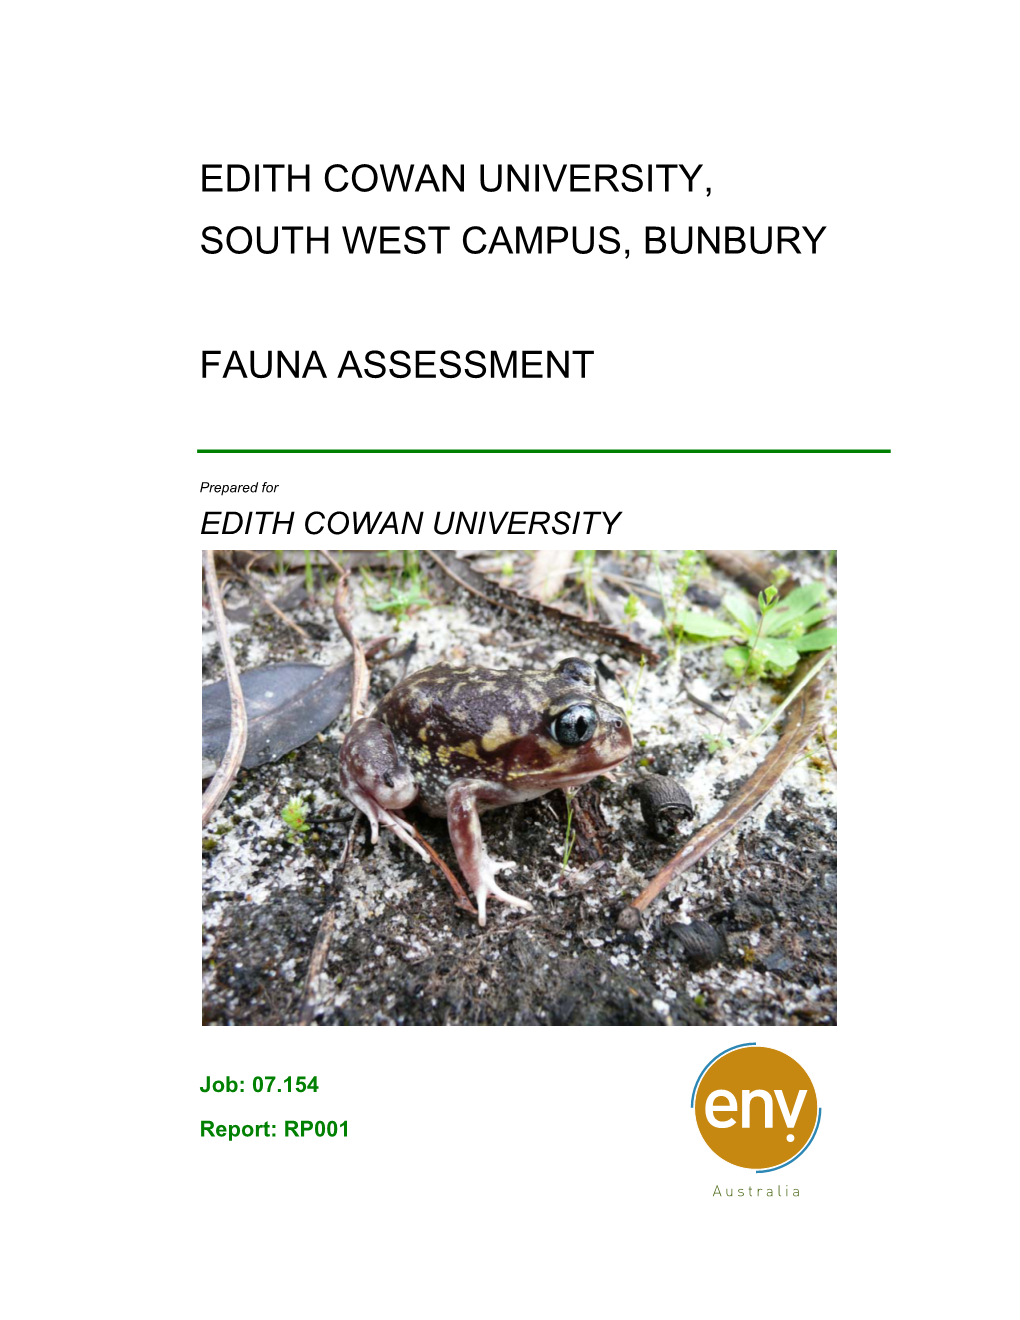 Edith Cowan University, South West Campus, Bunbury Fauna Assessment